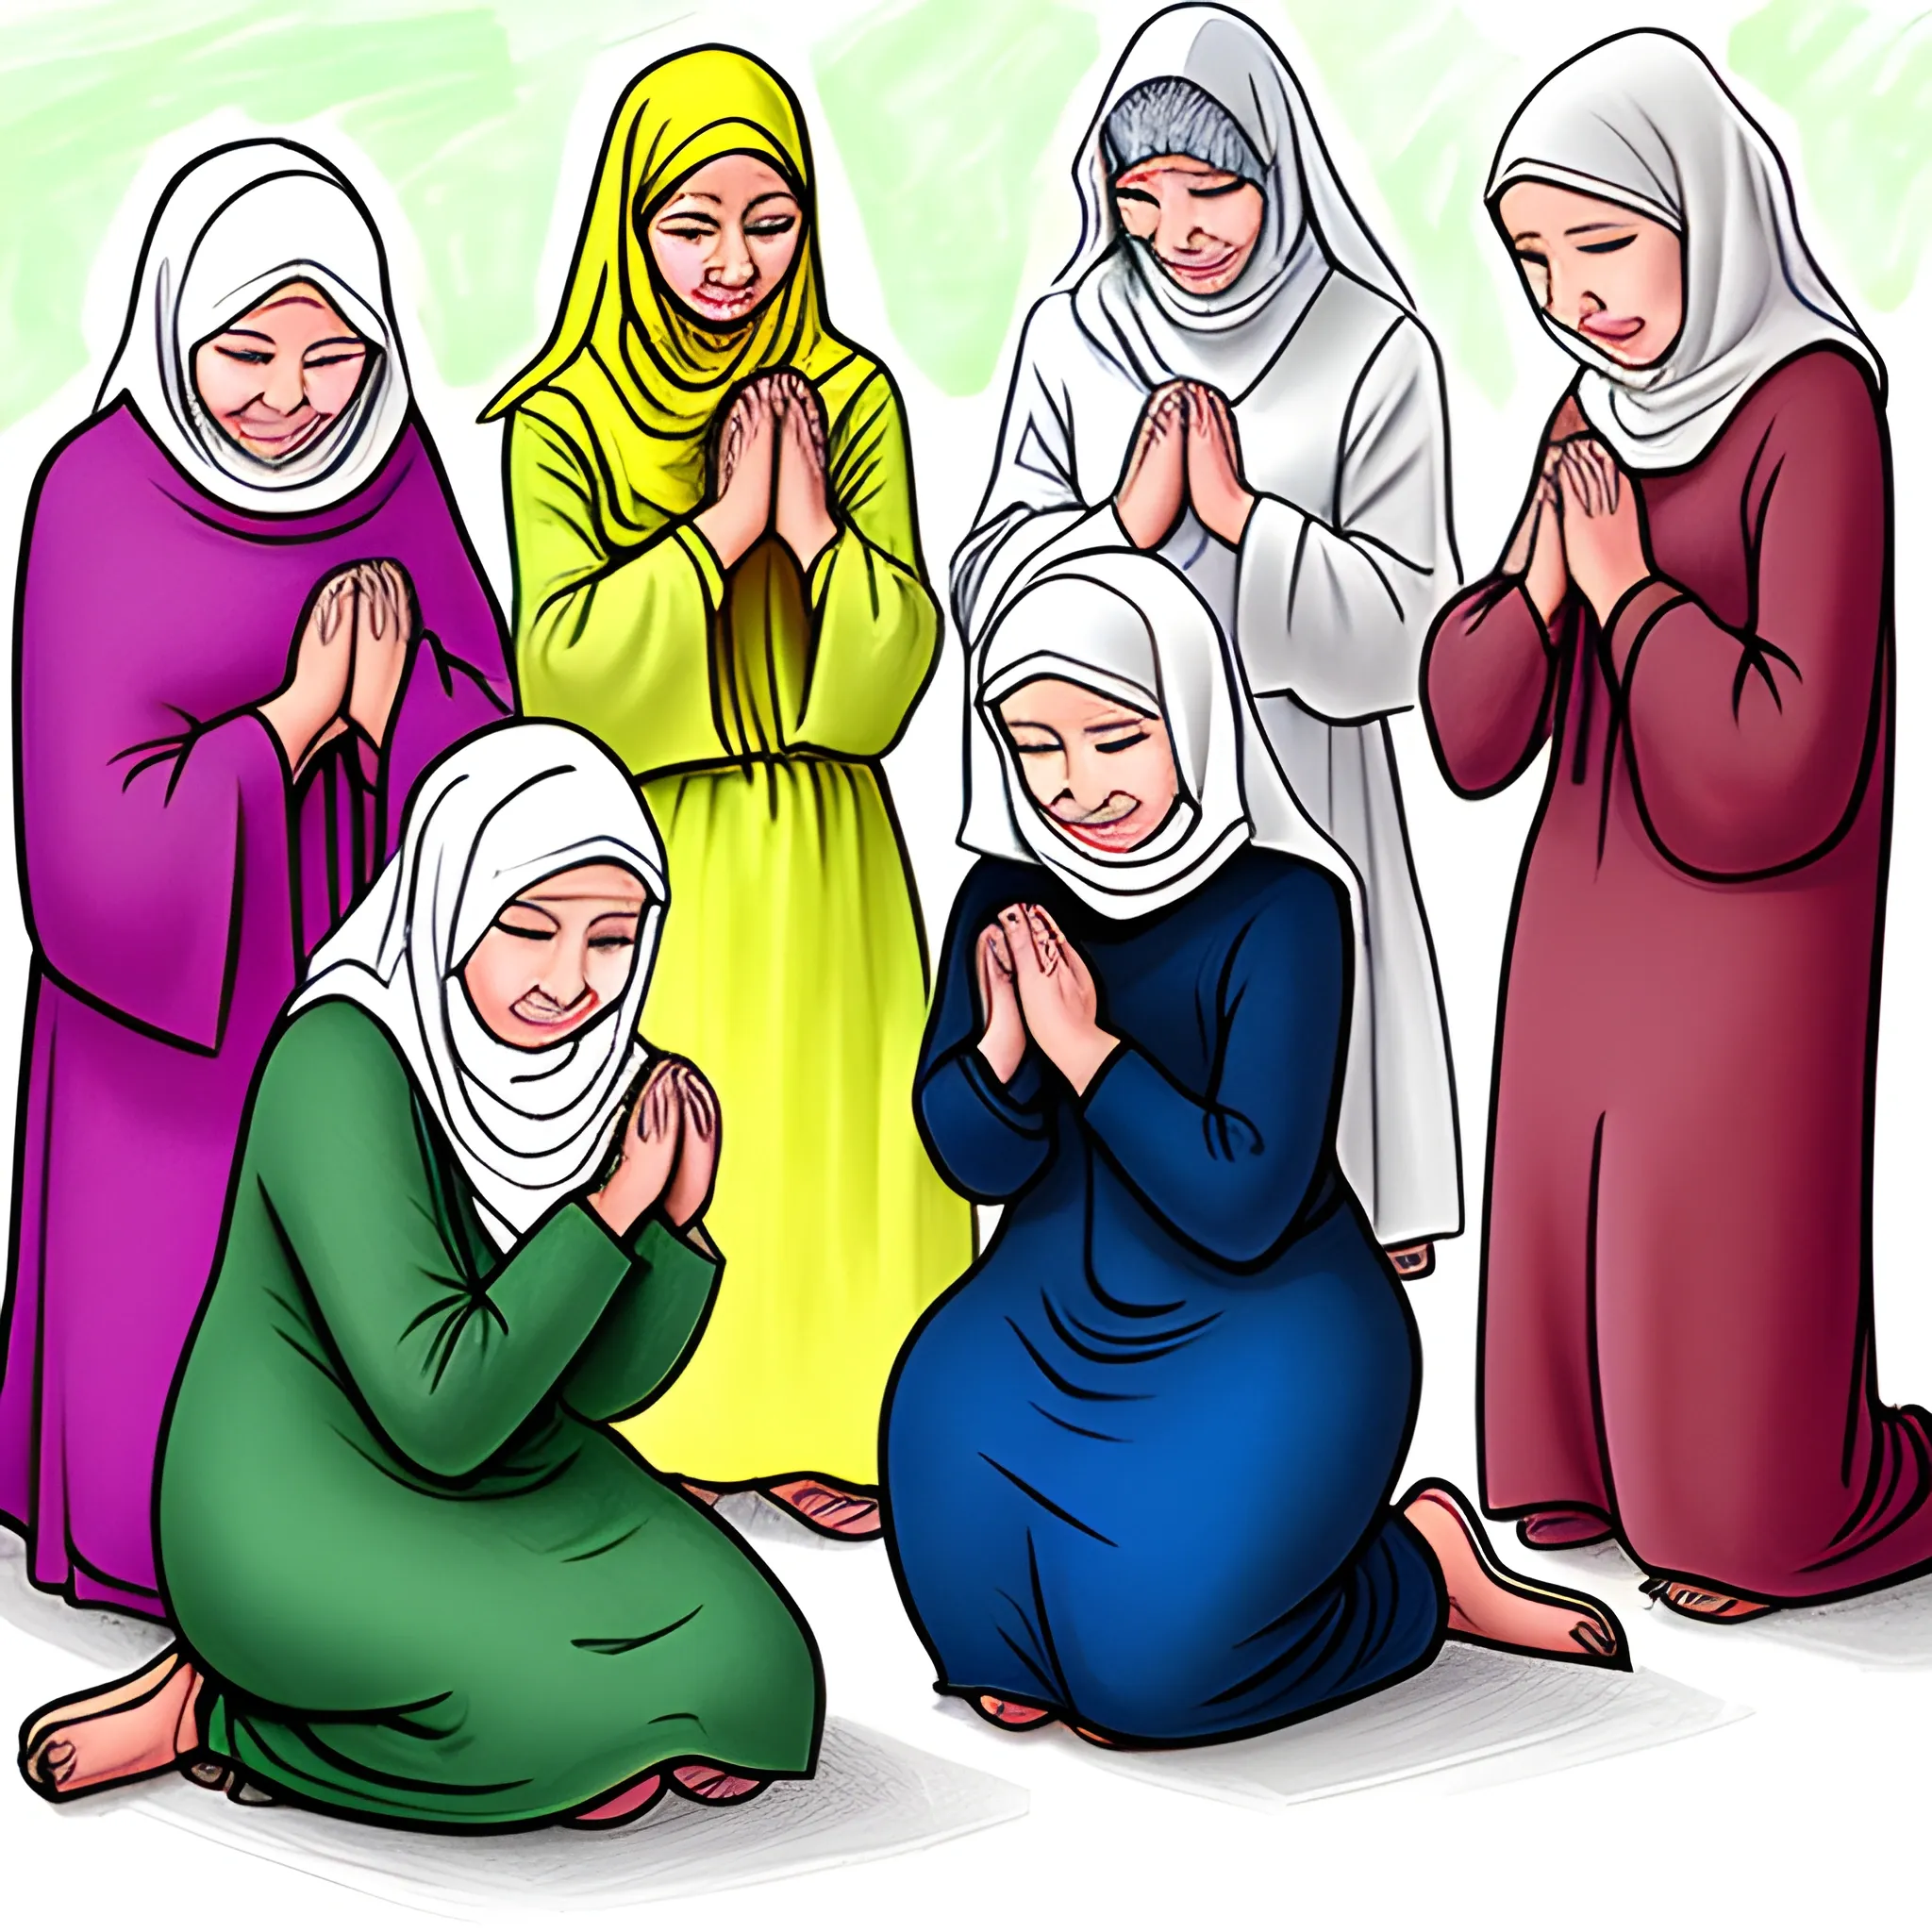  Draw a GROUP OF CHRISTIAN WOMEN PRAYING, Cartoon